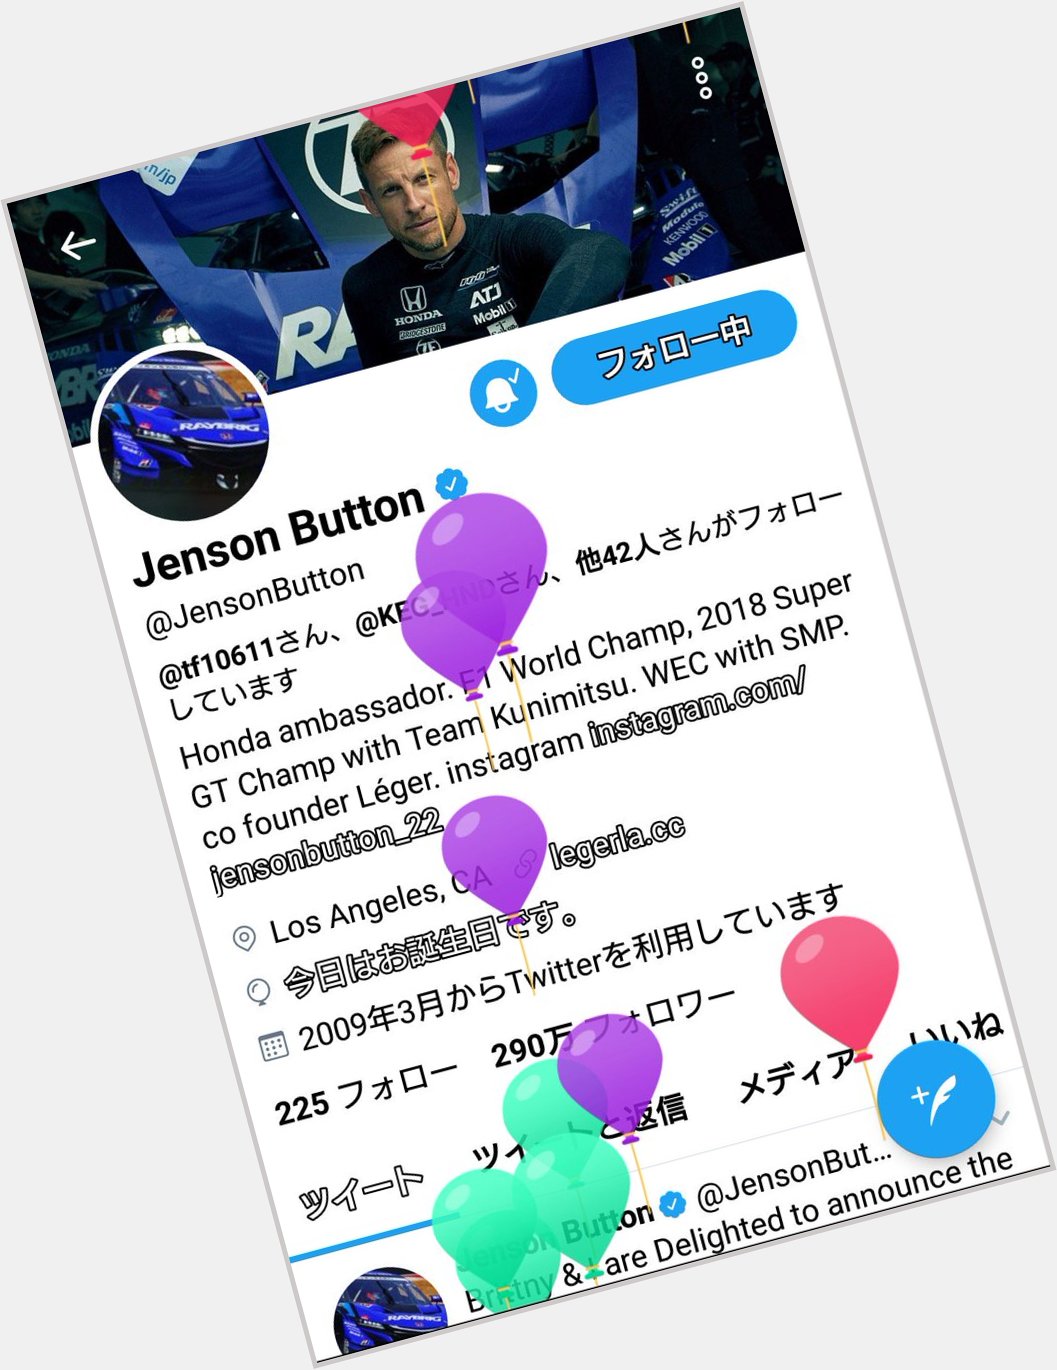    Jenson Button            Happy birthday to Jenson   